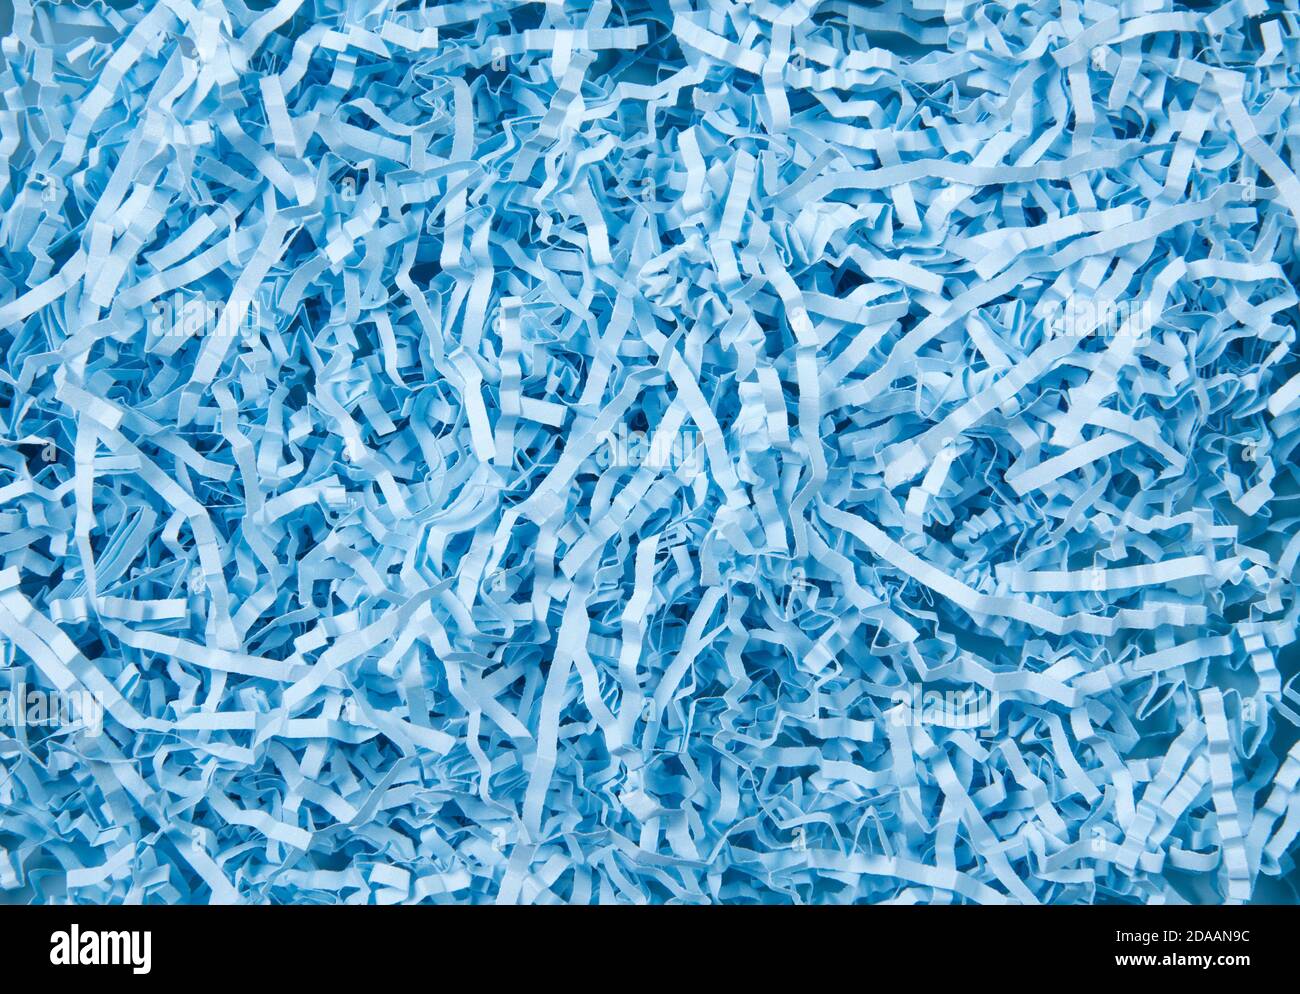 Blue color shredded paper - gift box filler background. Stock Photo